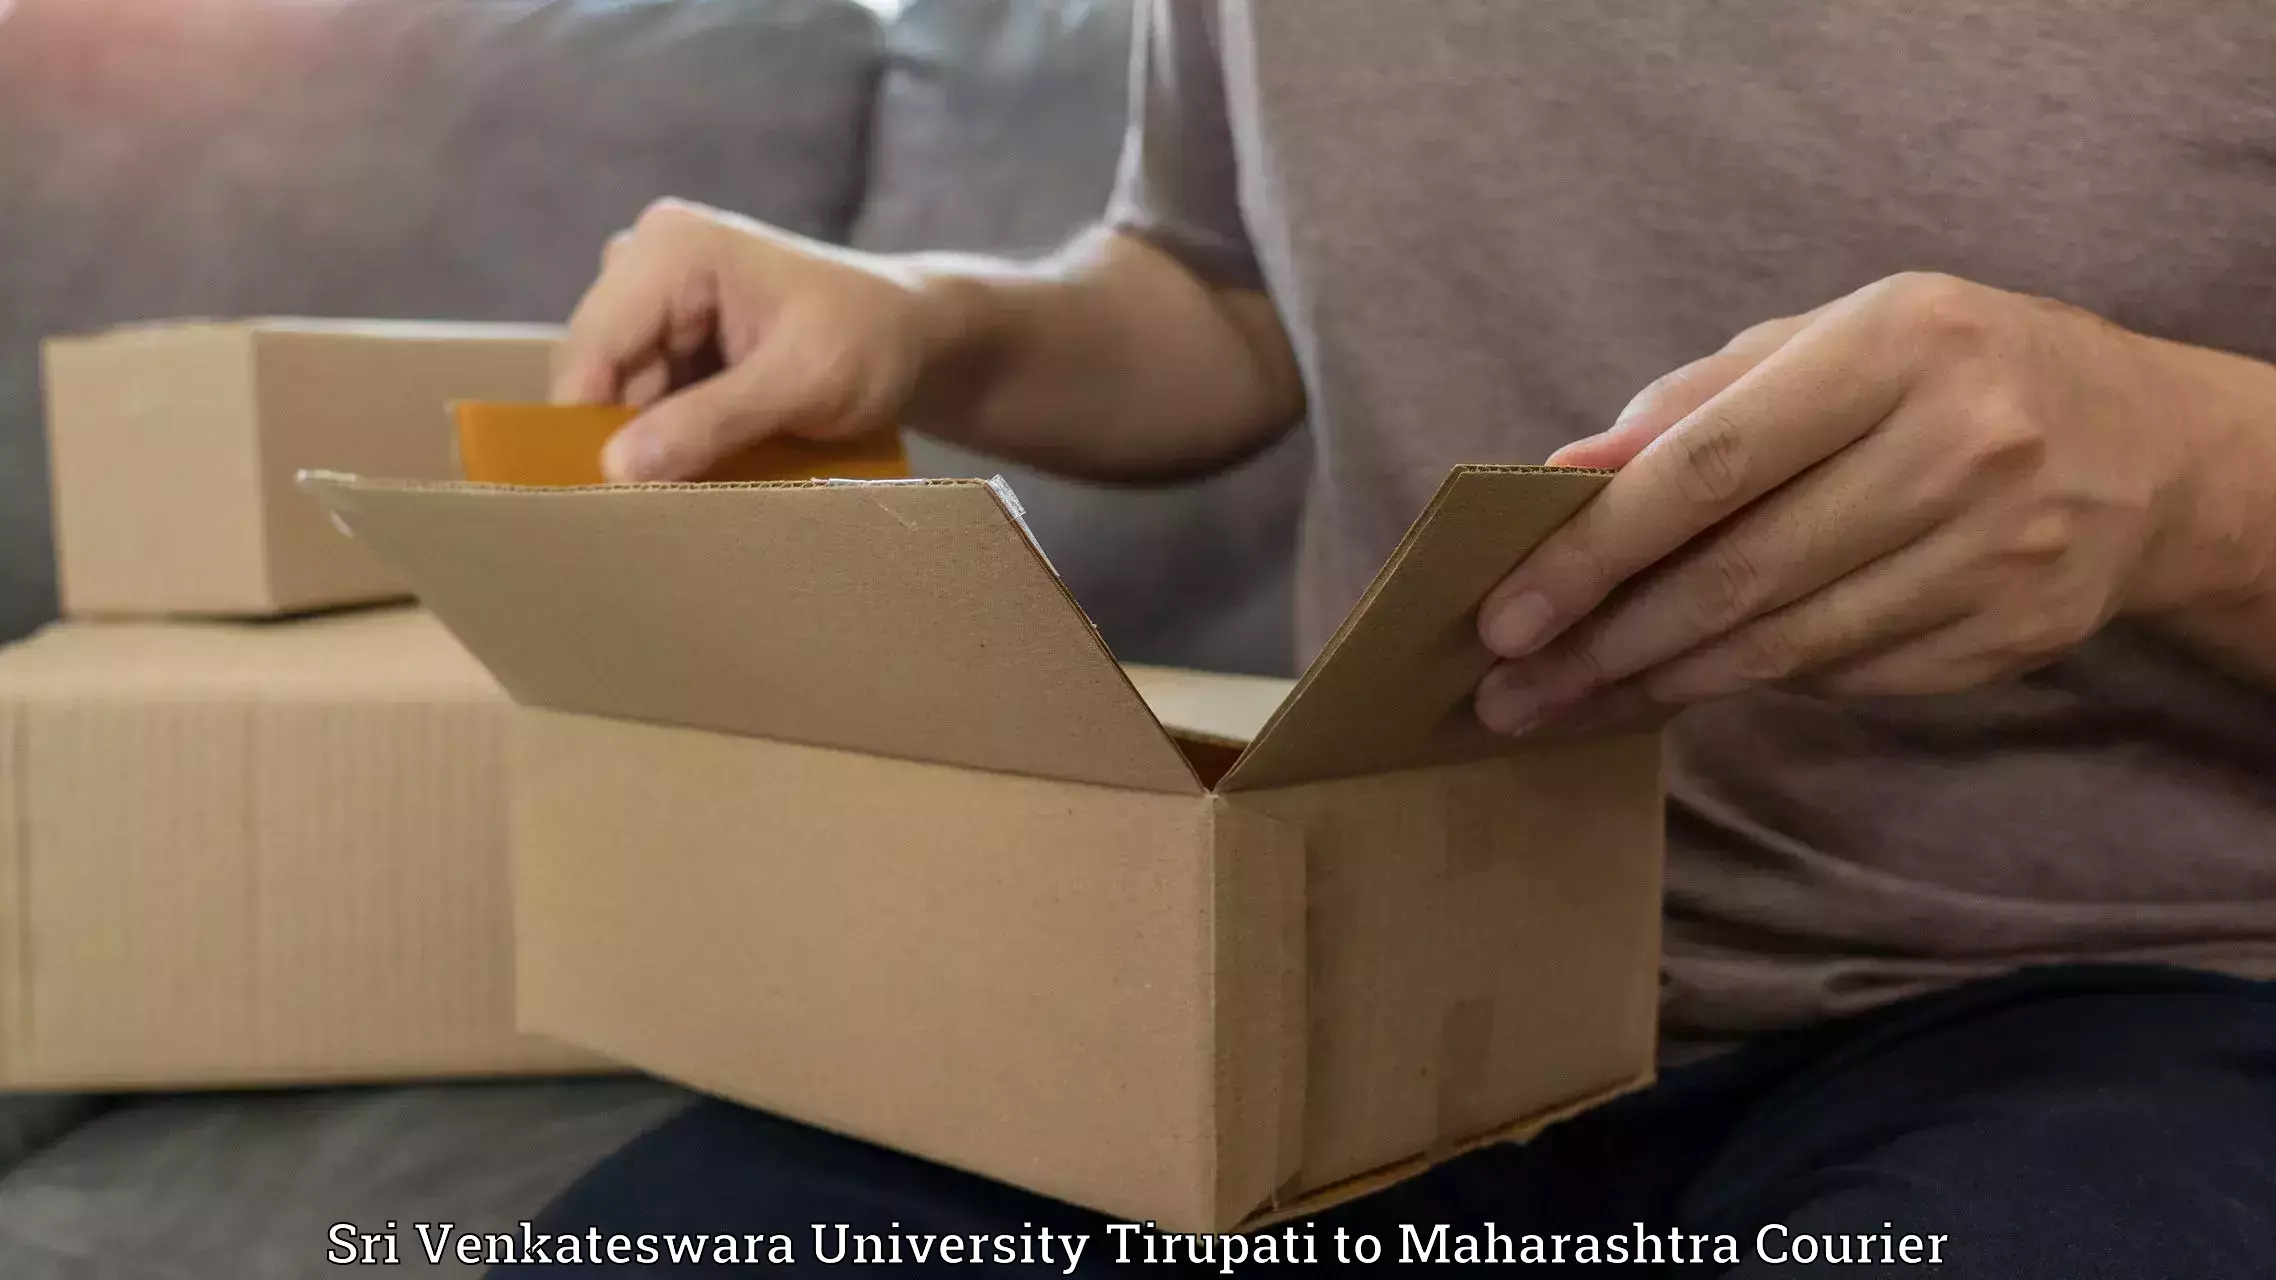 International parcel service Sri Venkateswara University Tirupati to Akole